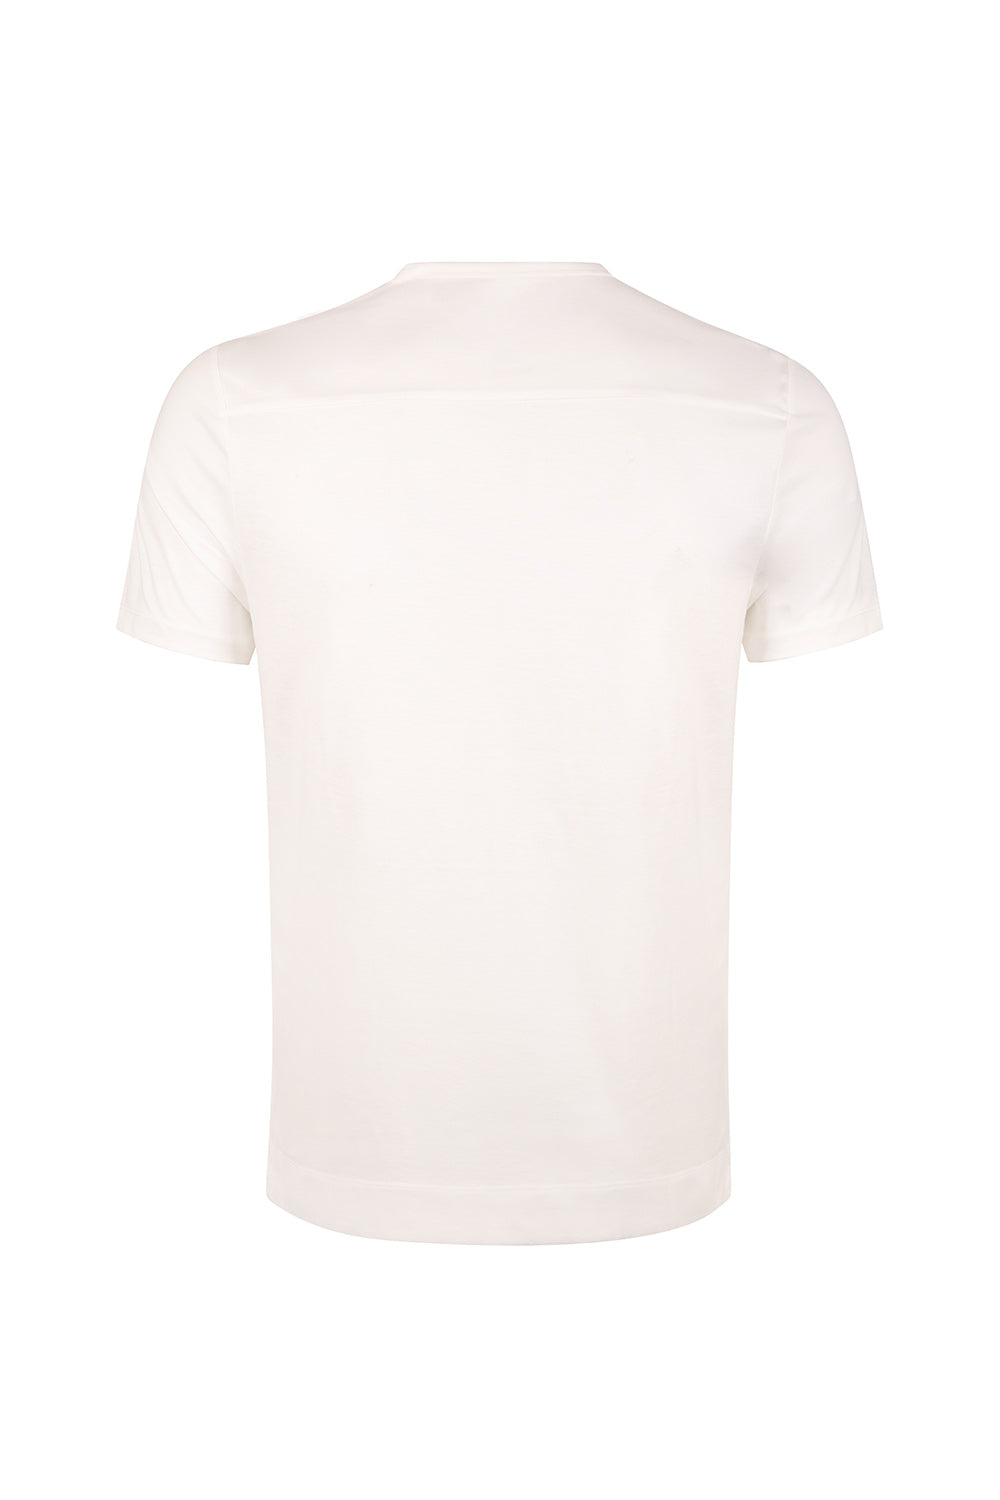 Limitato Grand Effects Men’s T-shirt White - Back View